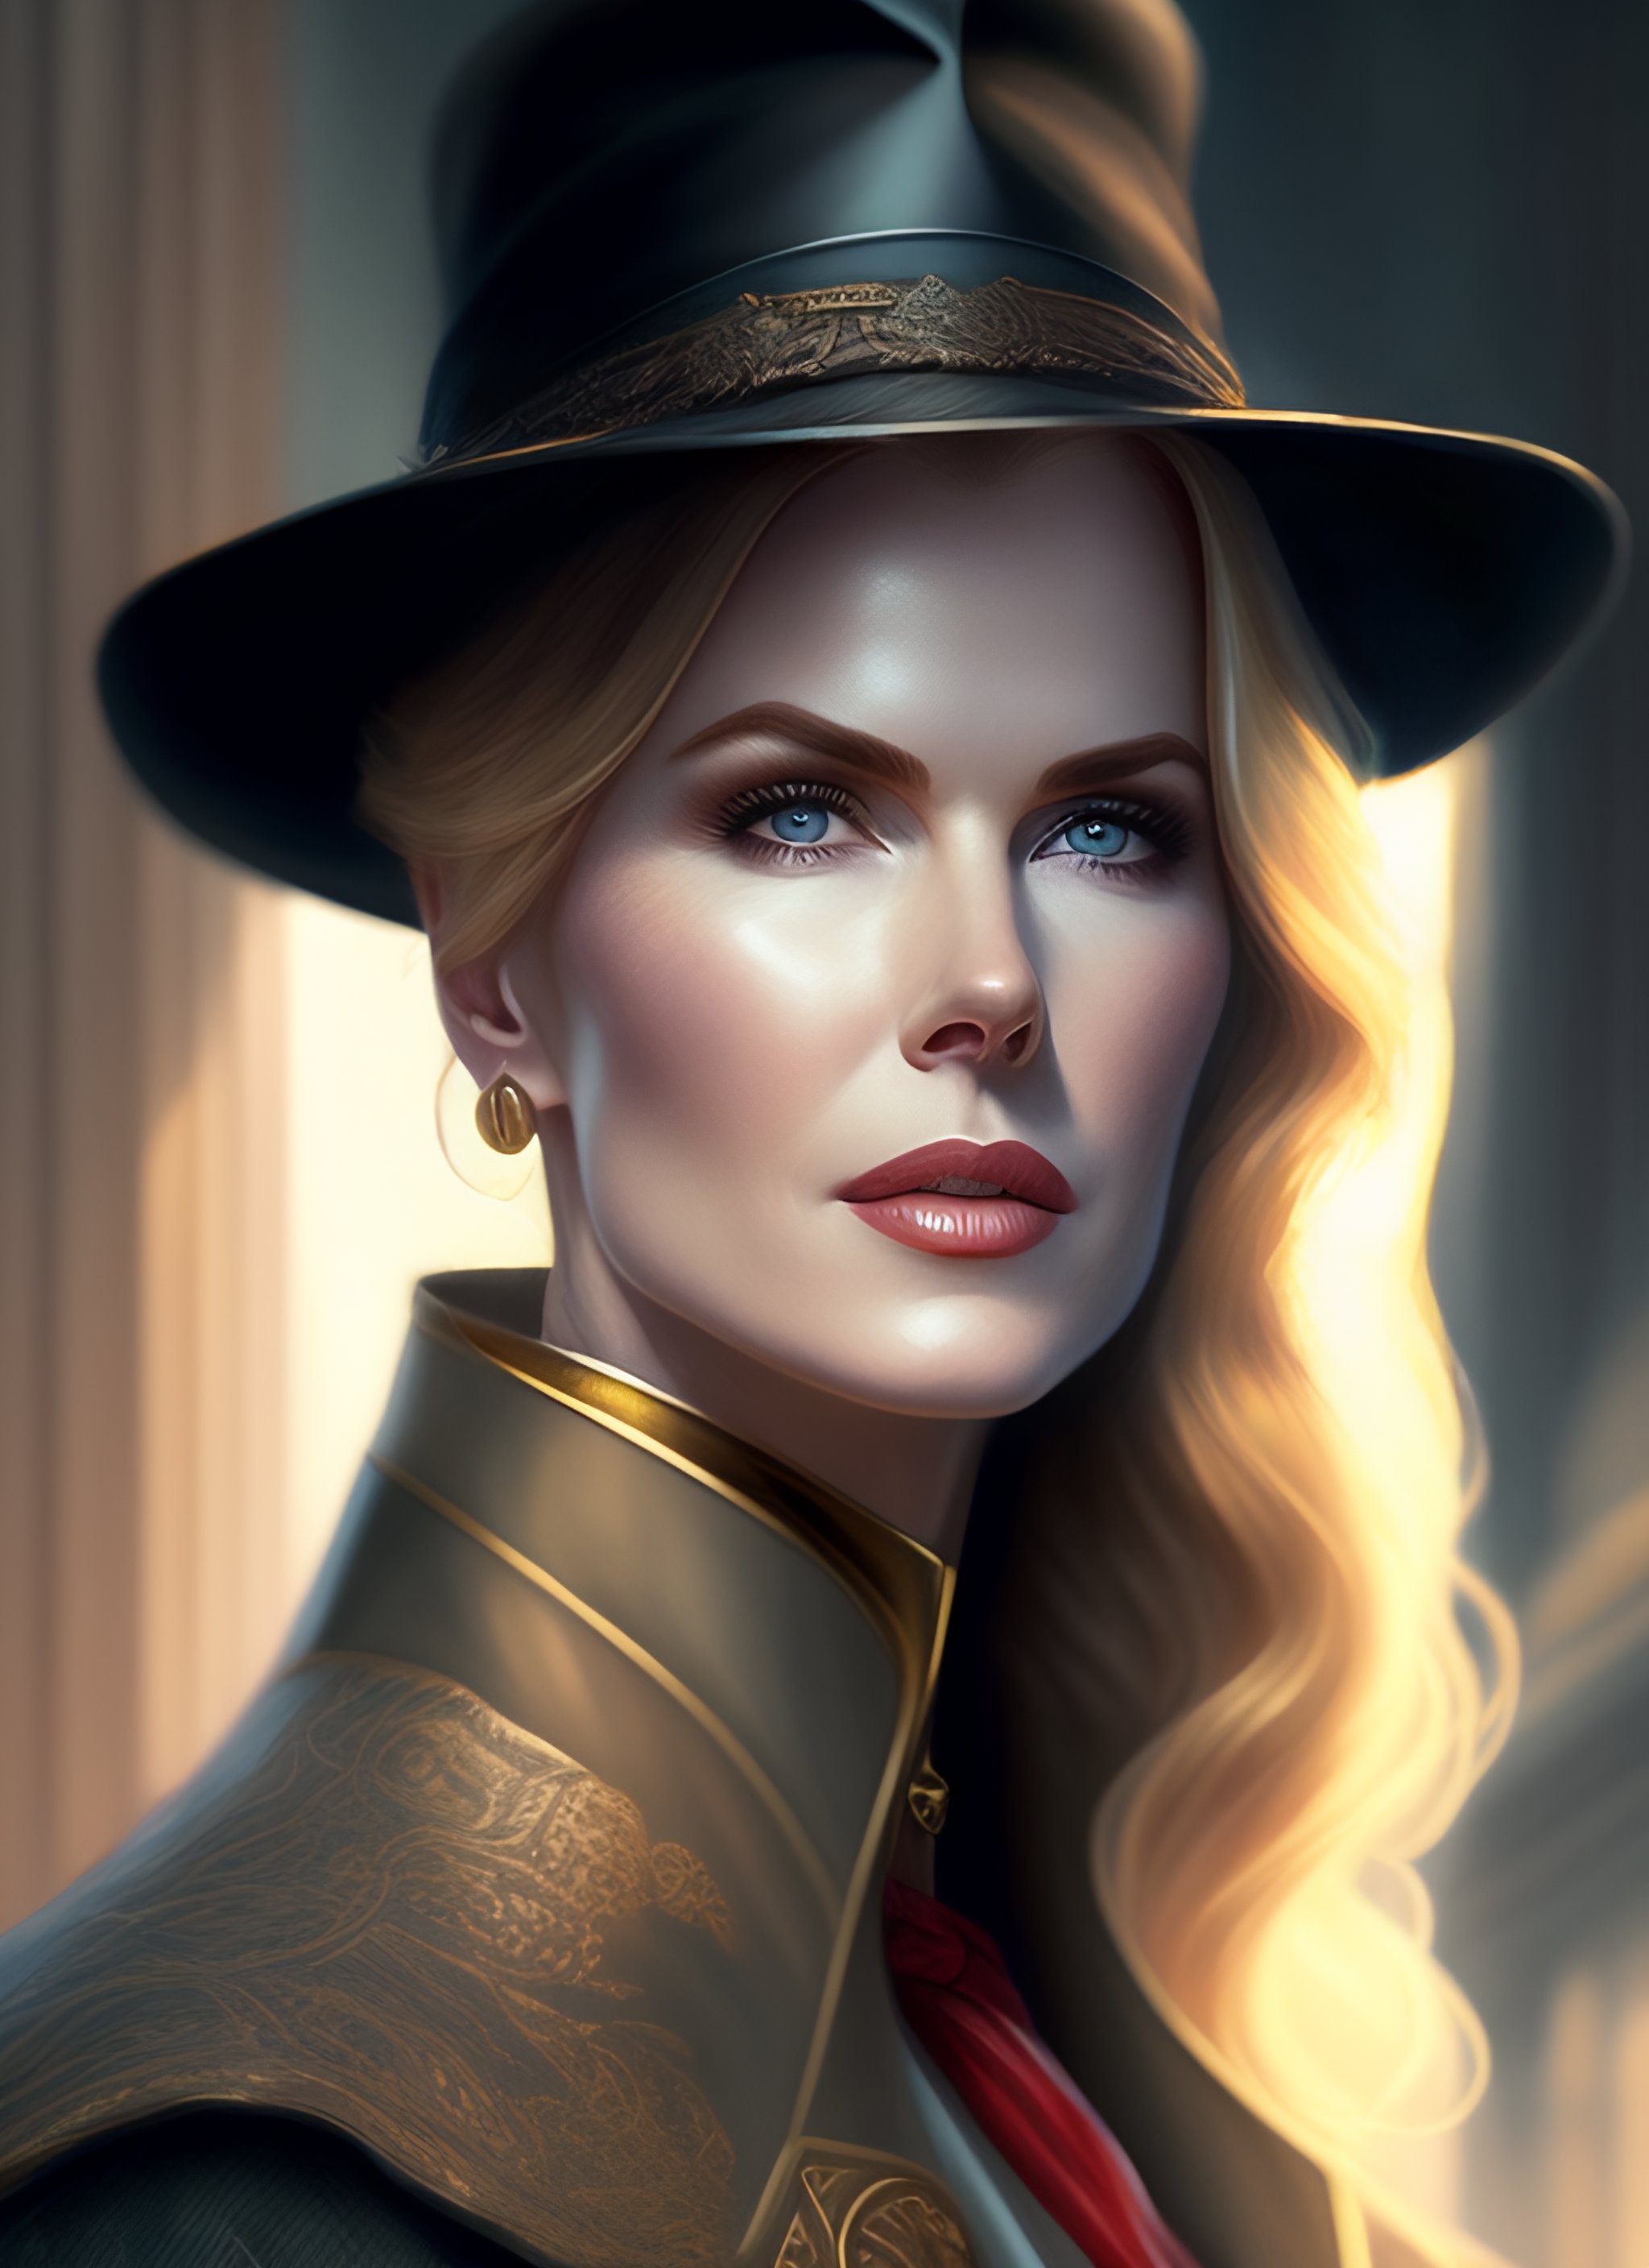 Lexica - Portrait Nicole Kidman as Sherlock Holmes, highly detailed ...